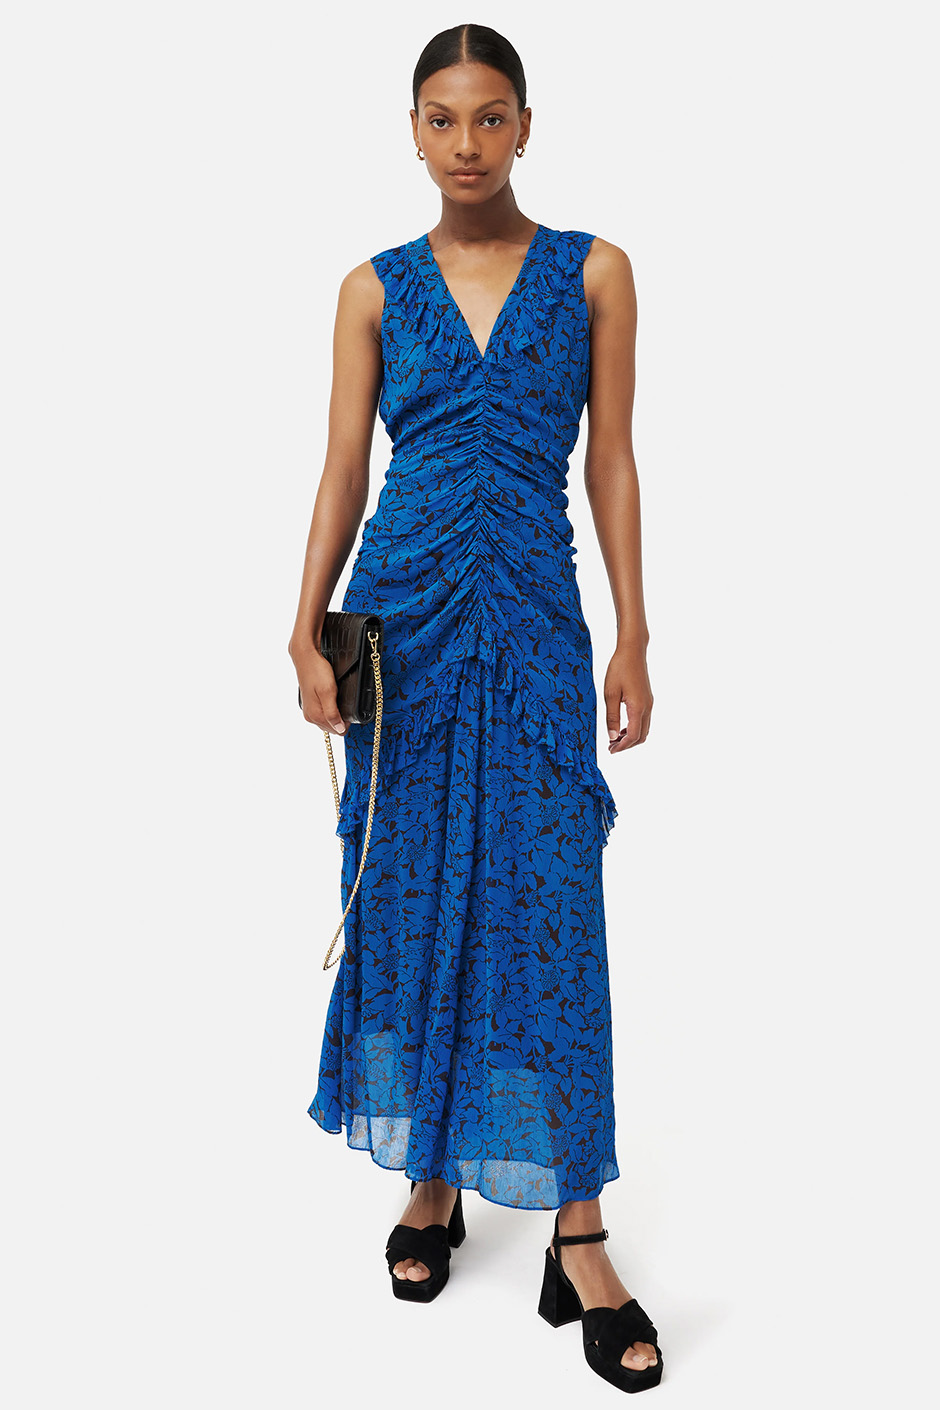 Blue crinkle draped dress with leaf pattern from Jigsaw as summer wedding guest dress idea